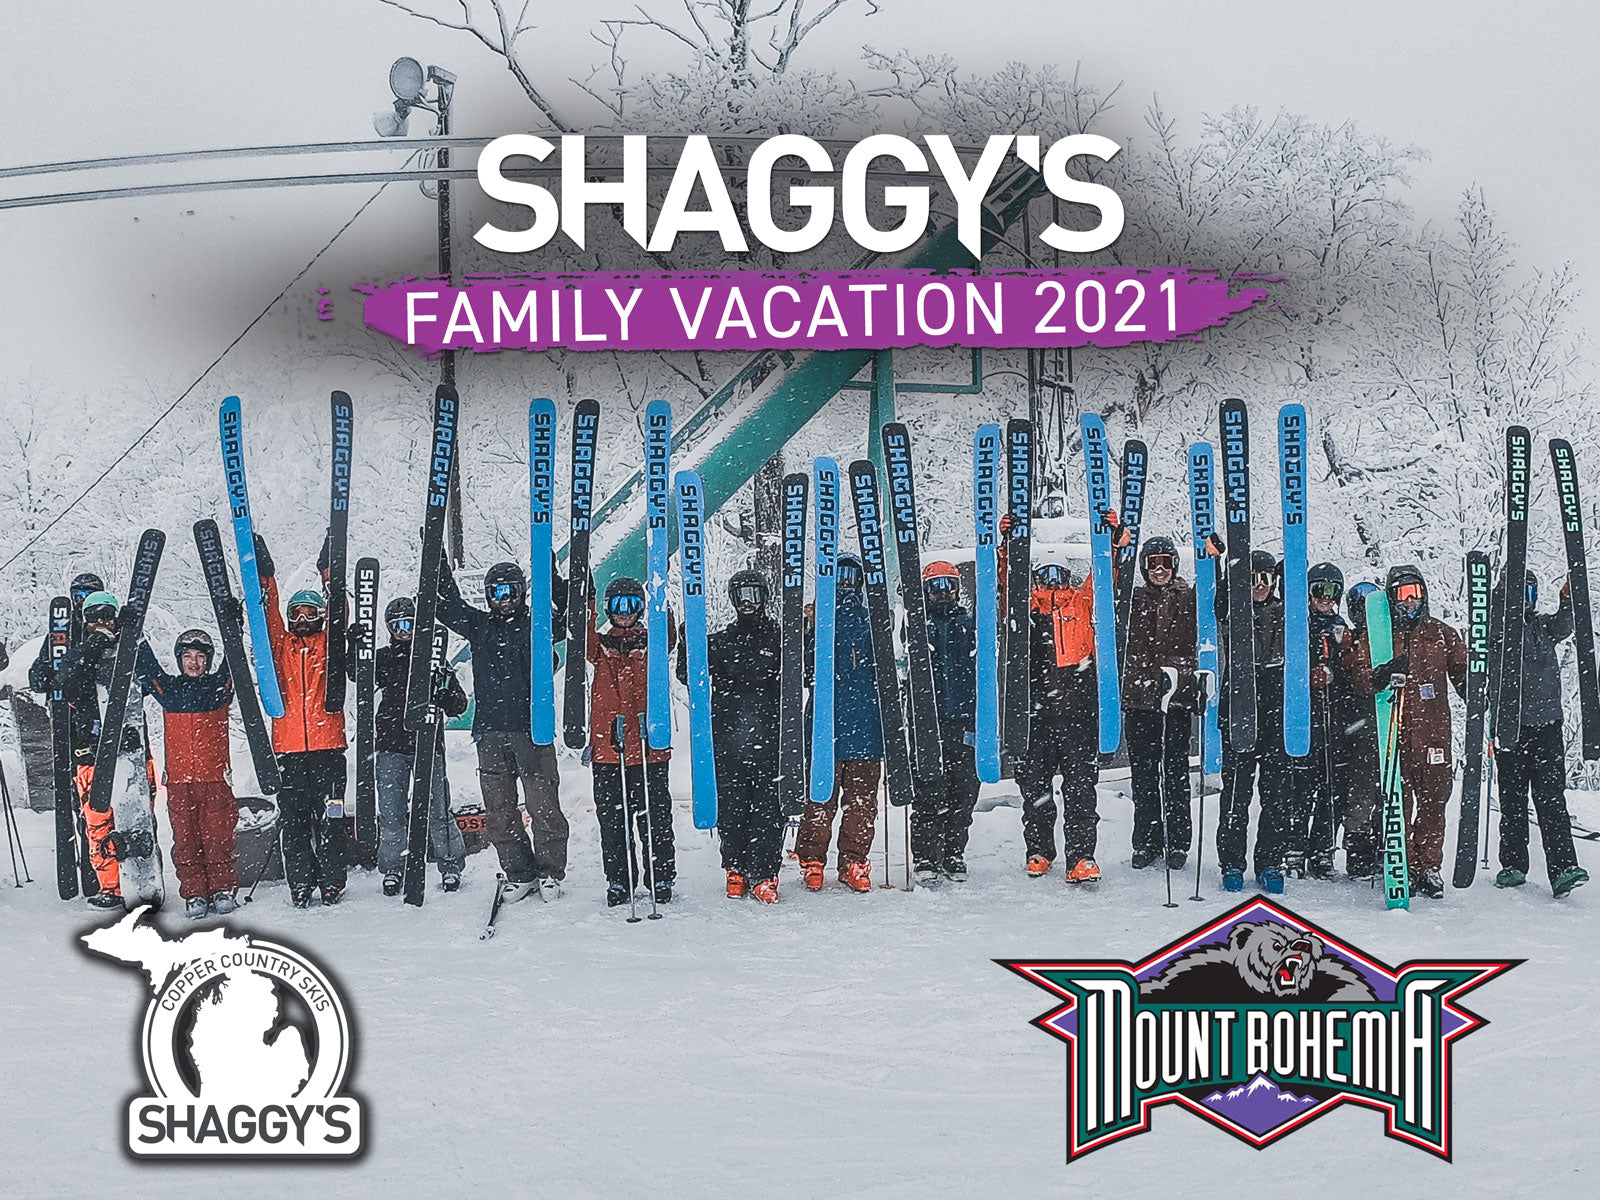 Event: Shaggy's Family Vacation 2021